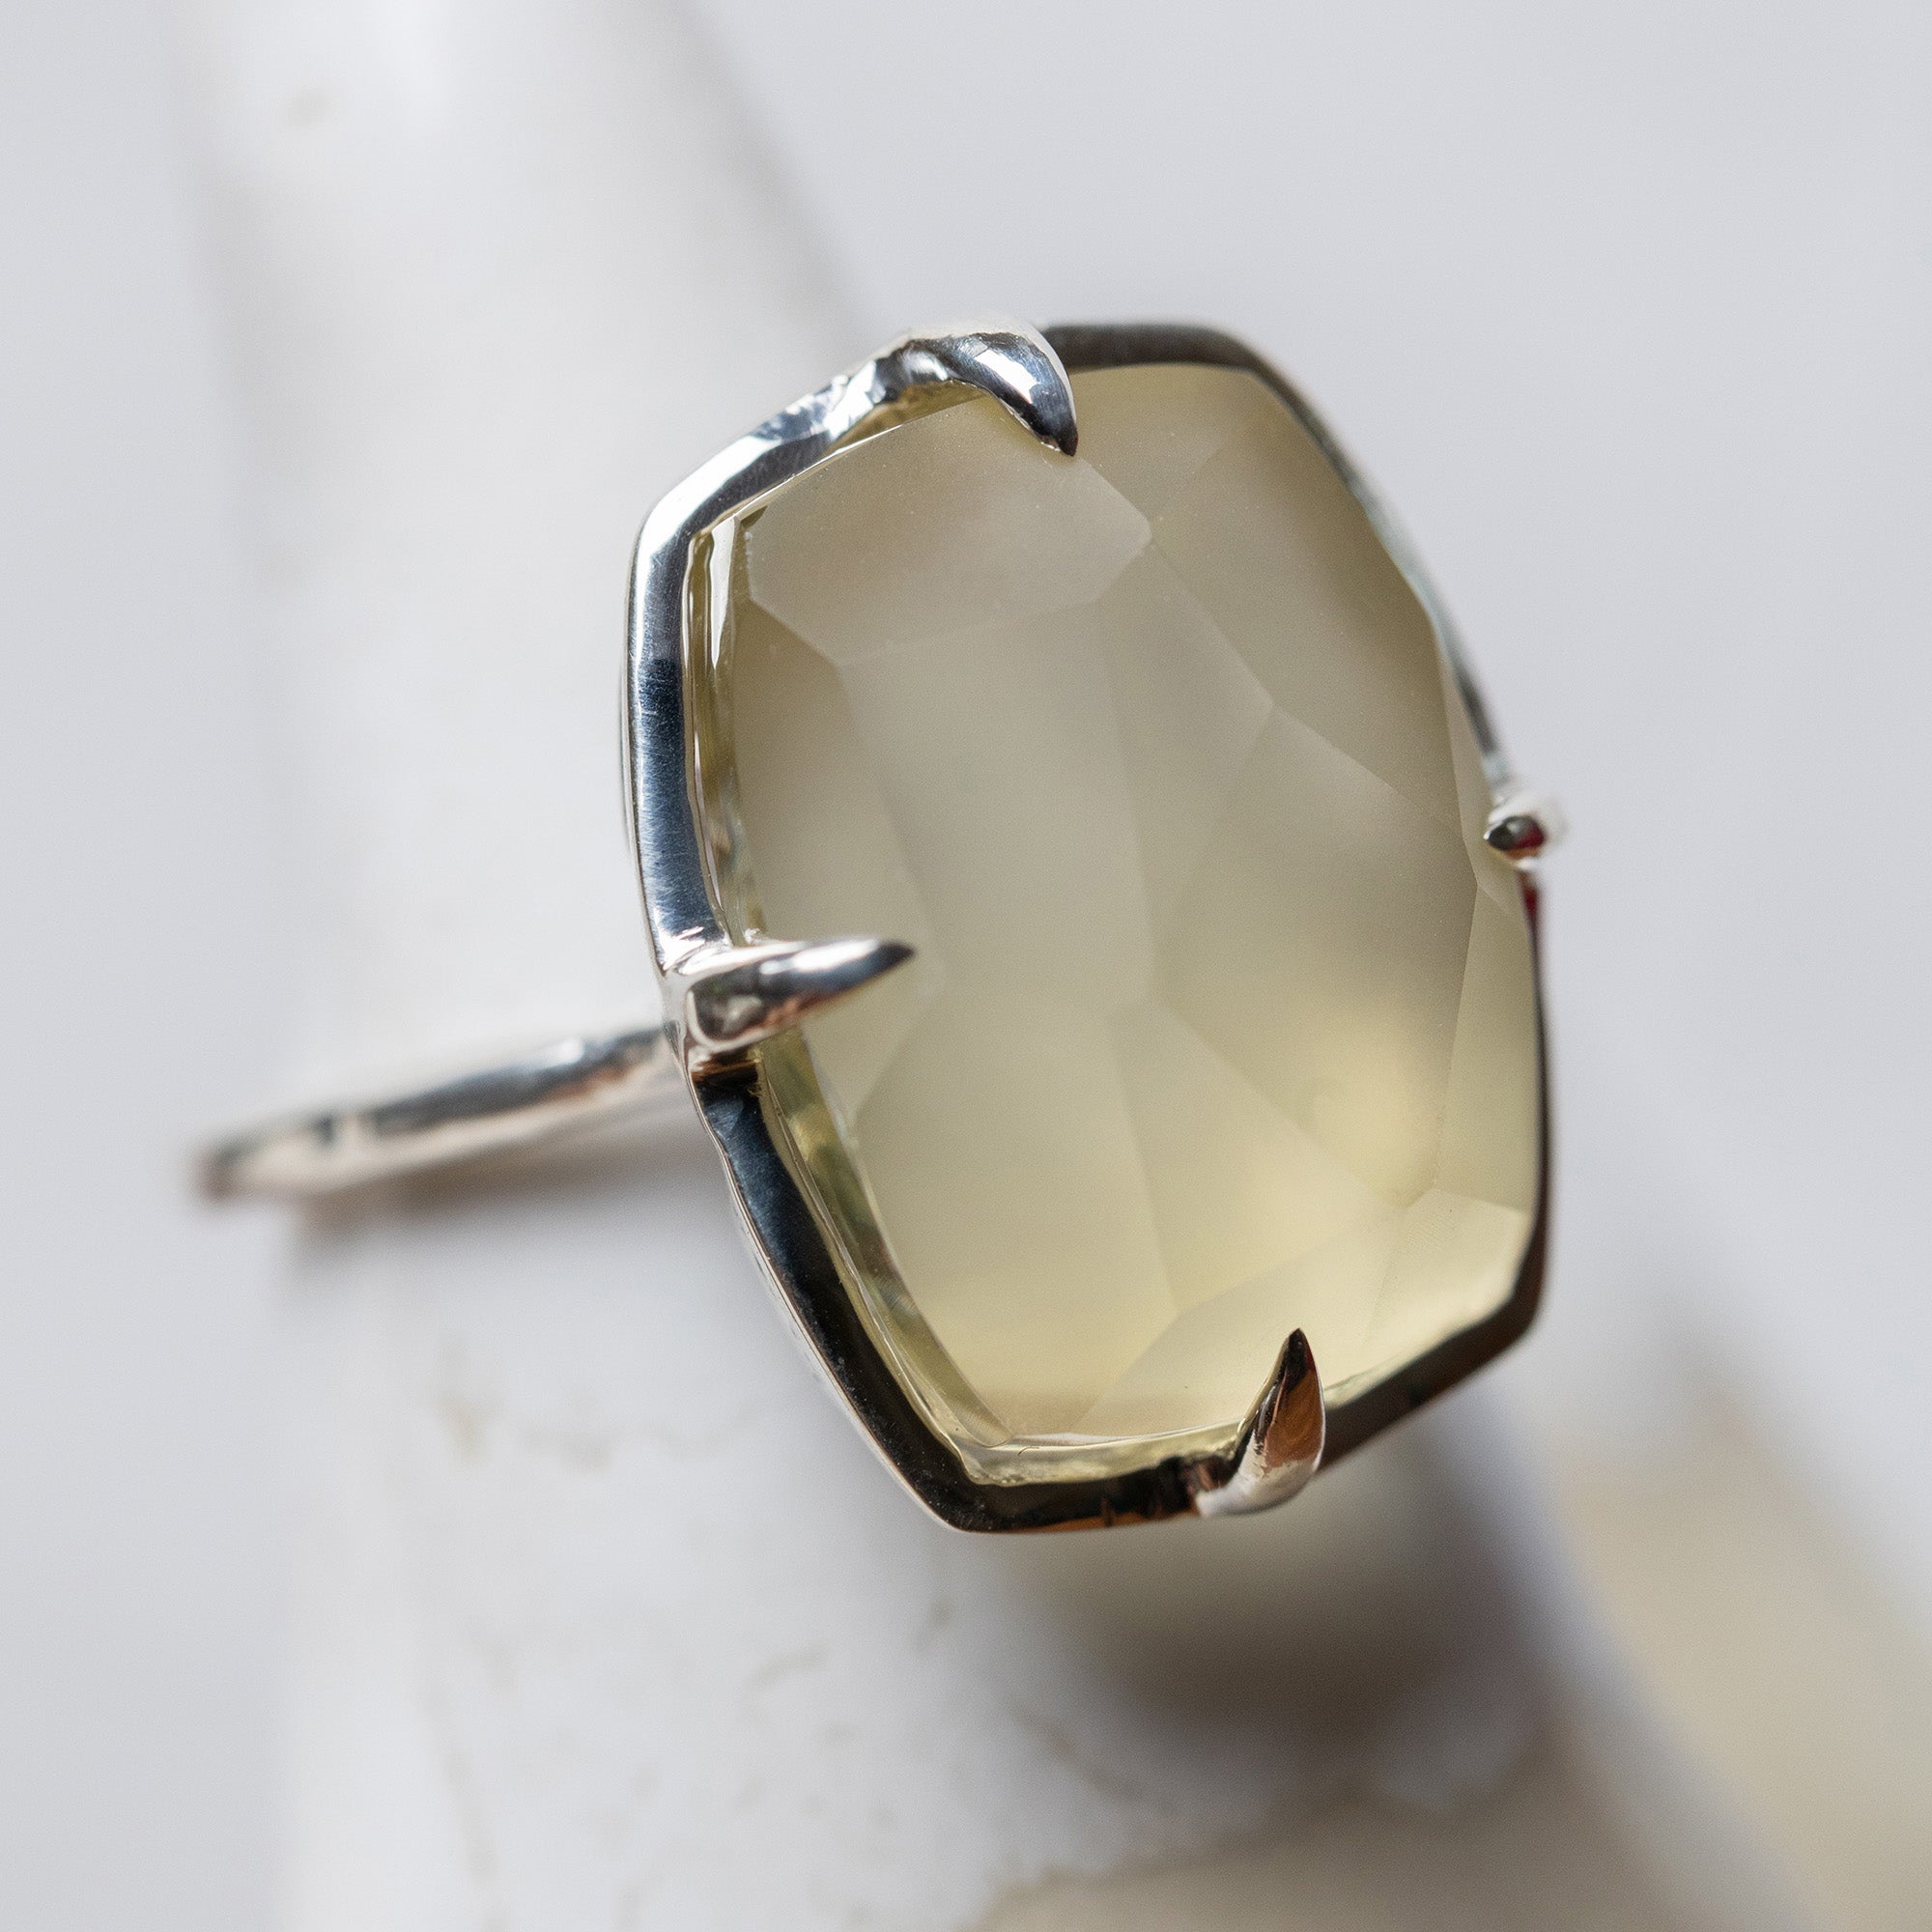 Lemon Quartz with Hidden Arabesque Design Silver Ring